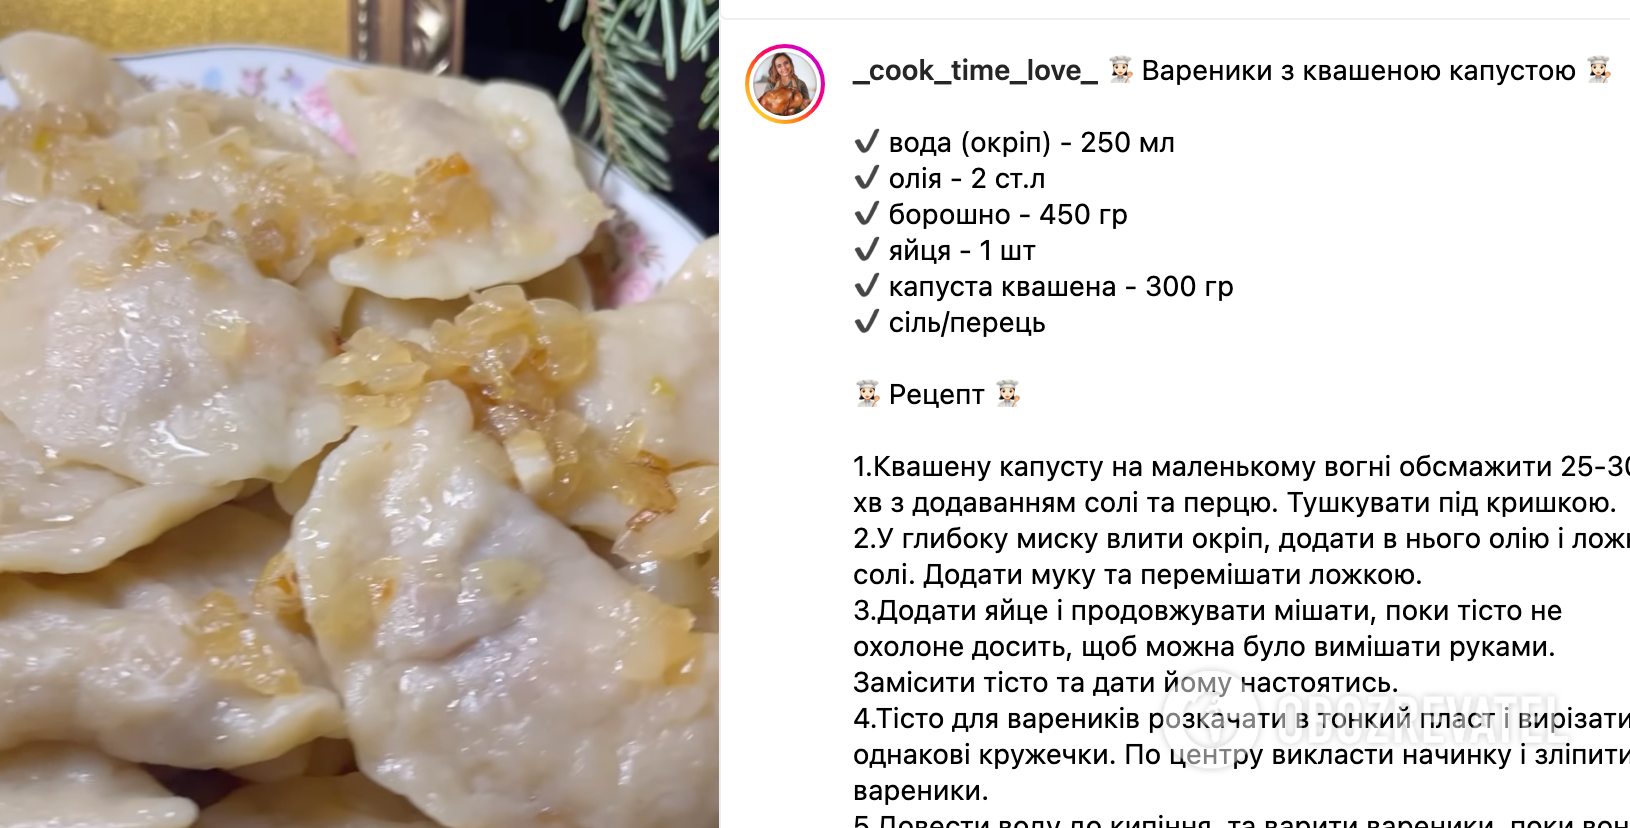 Recipe for dumplings